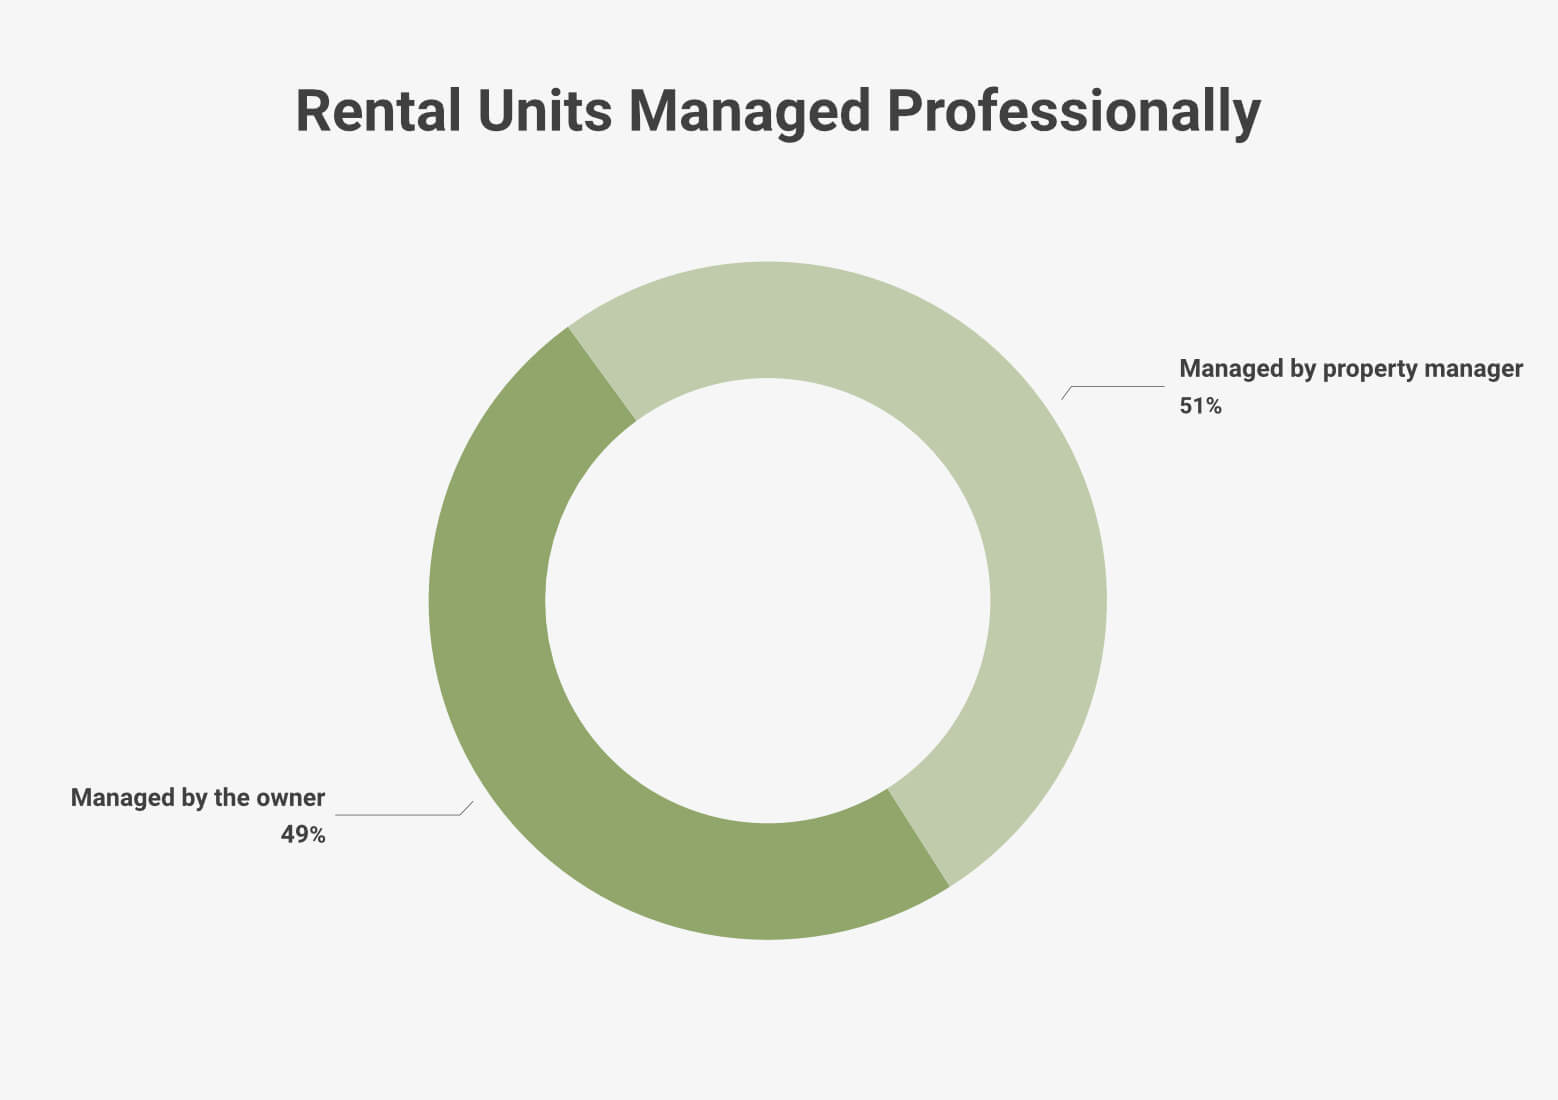 Percentage of Rental Units Managed Professionally